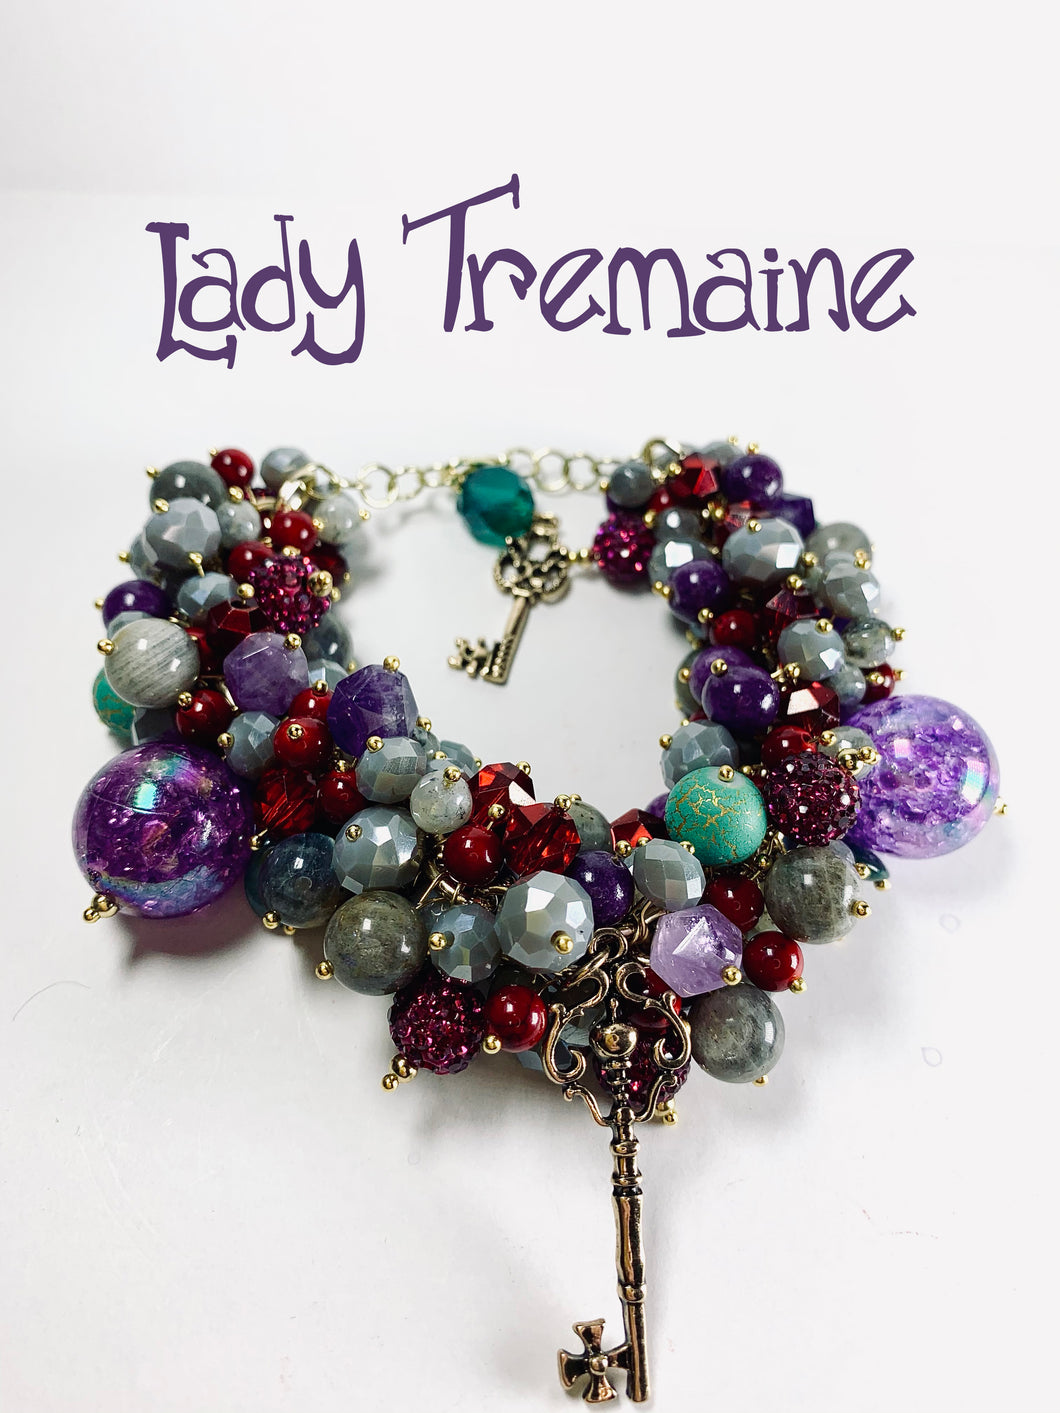 Lady Tremaine